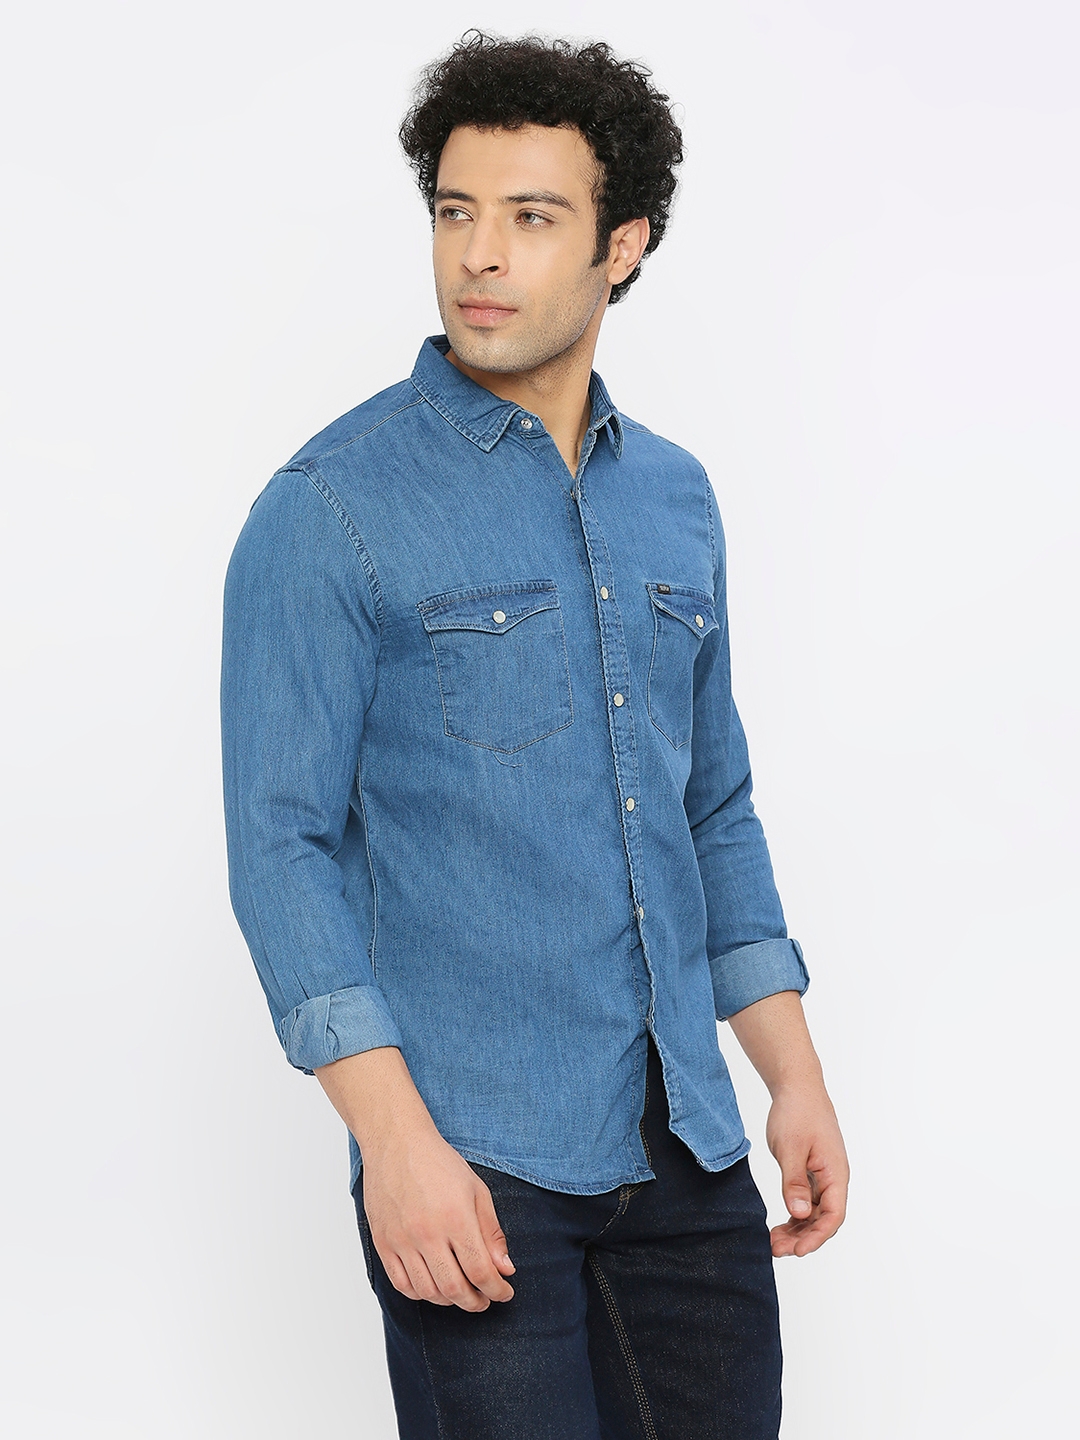 Sollobell Men Cutaway Collar Plain Light Blue Full Sleeve Casual Denim Shirt  (Large) : Amazon.in: Clothing & Accessories